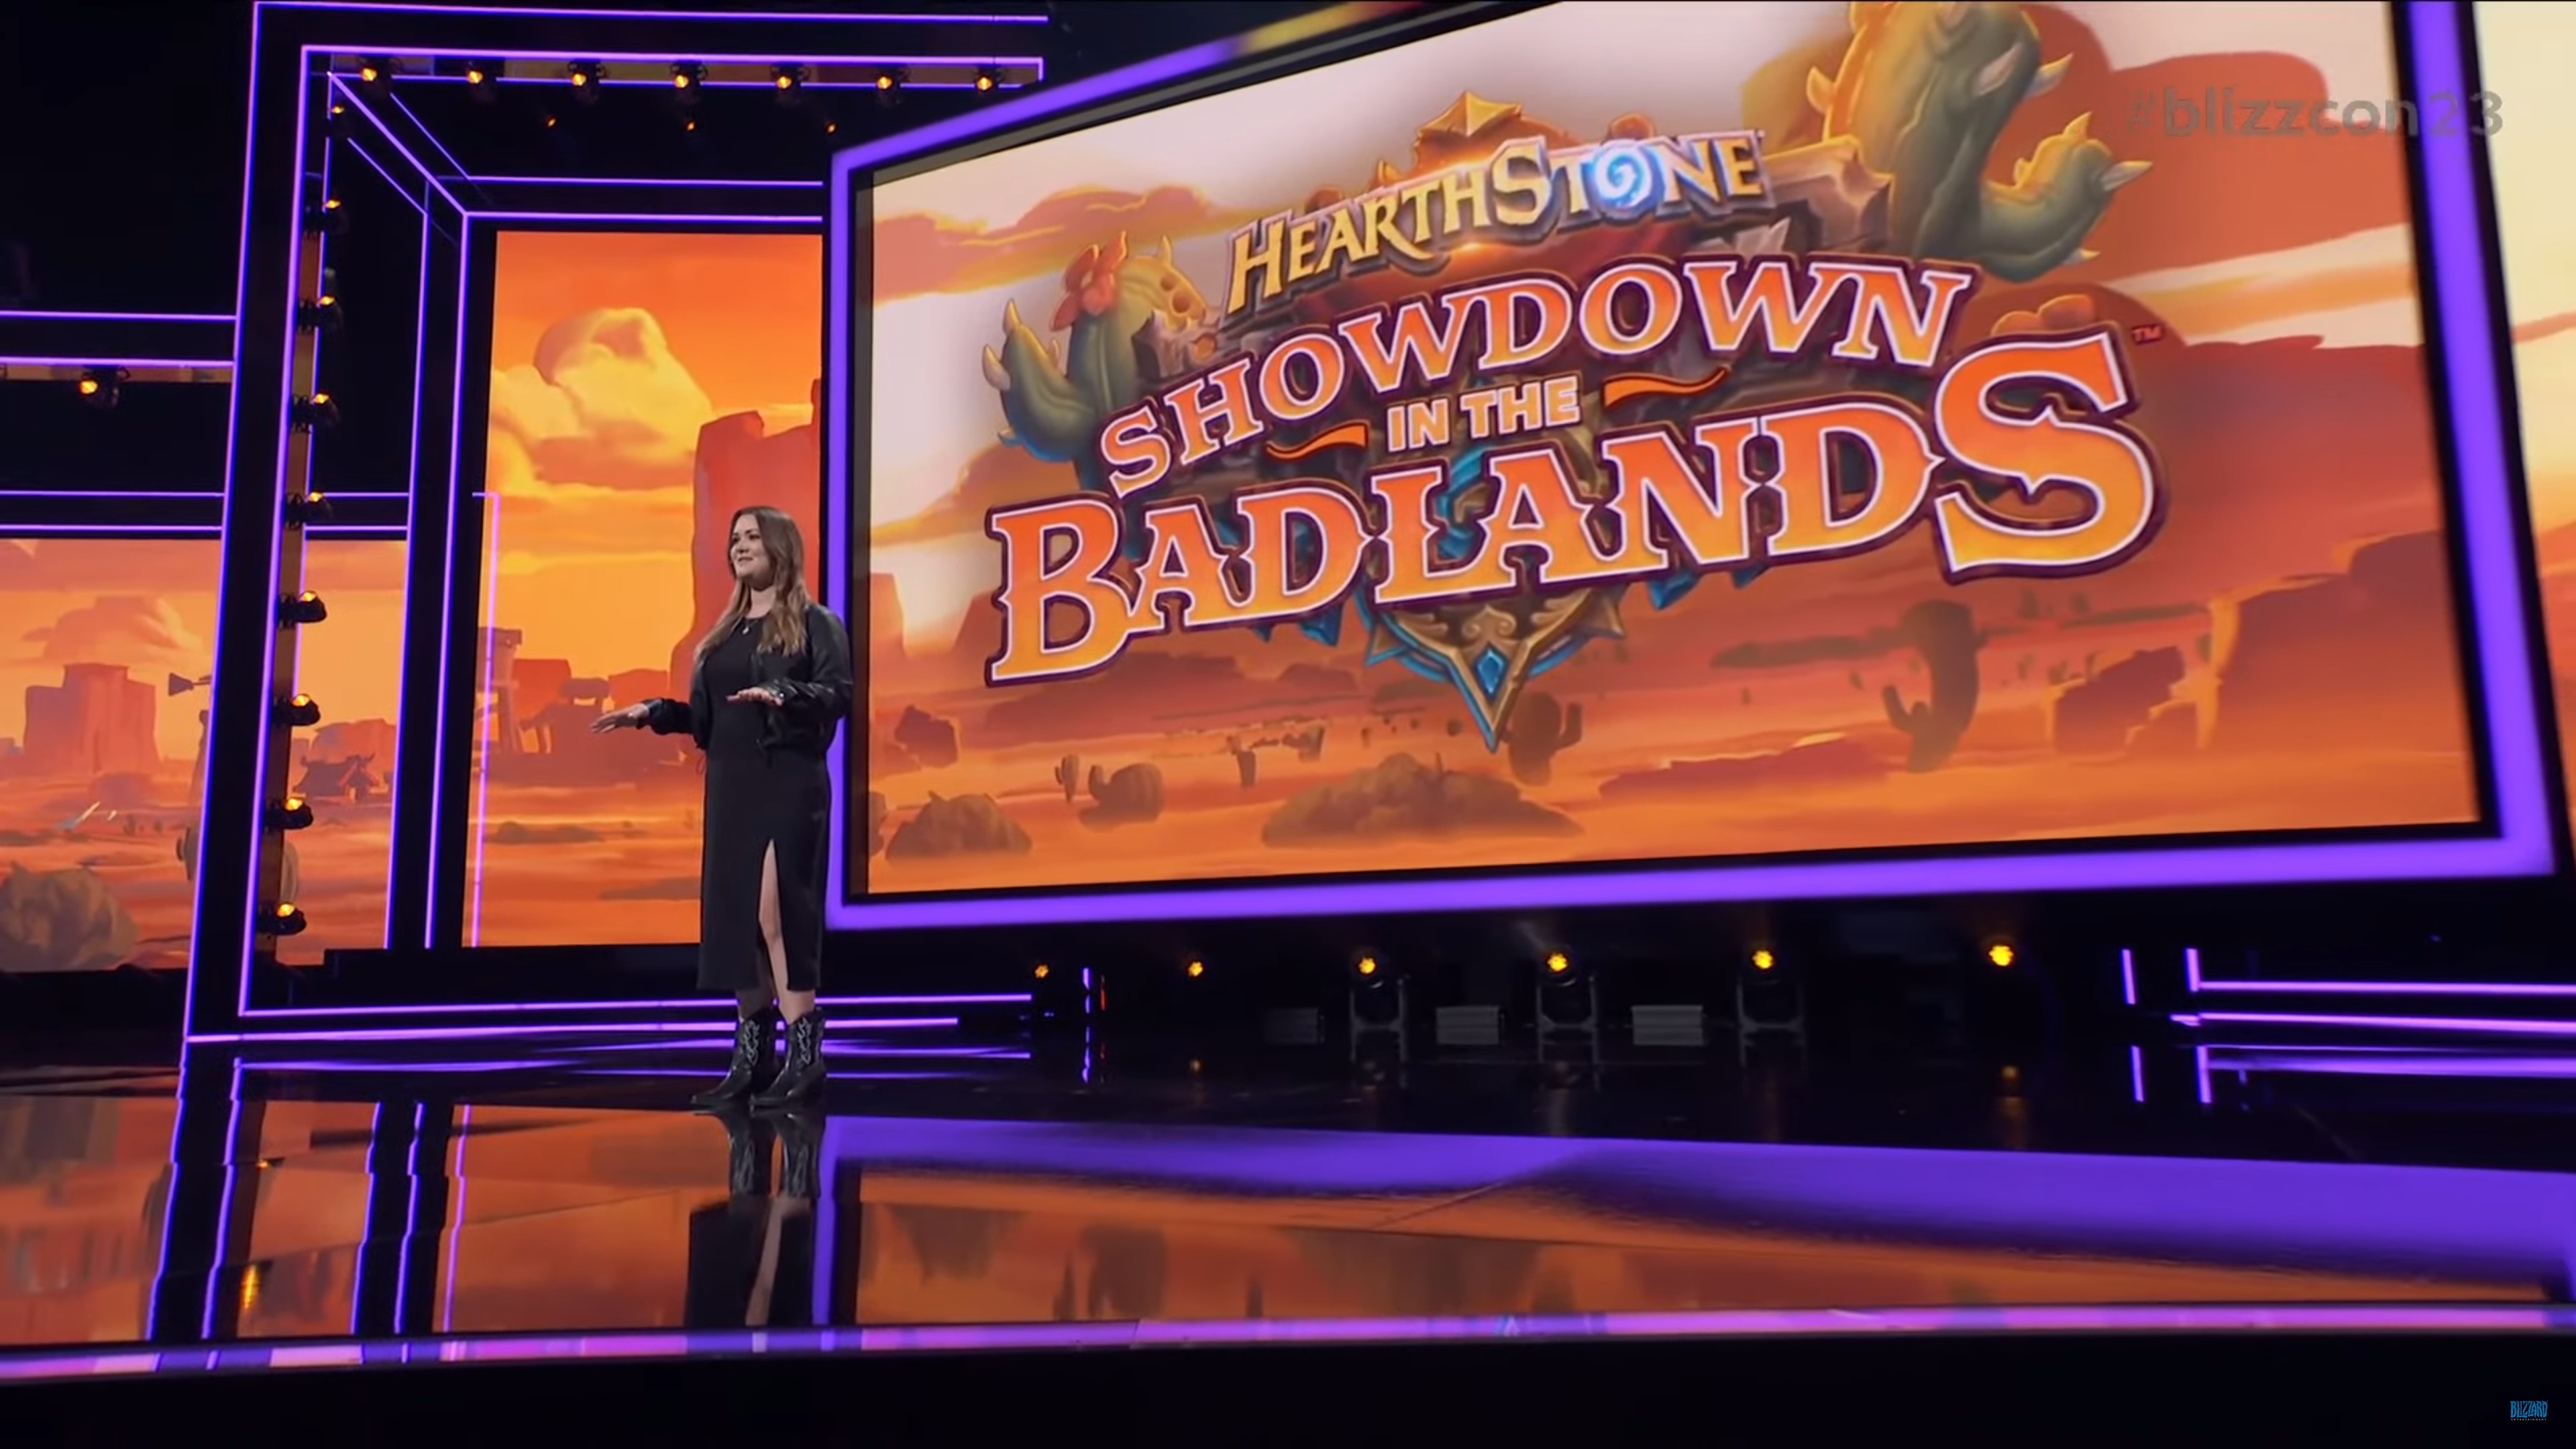 Hearthstone: Showdown In The Badlands Announced, Launching November 14 -  mxdwn Games